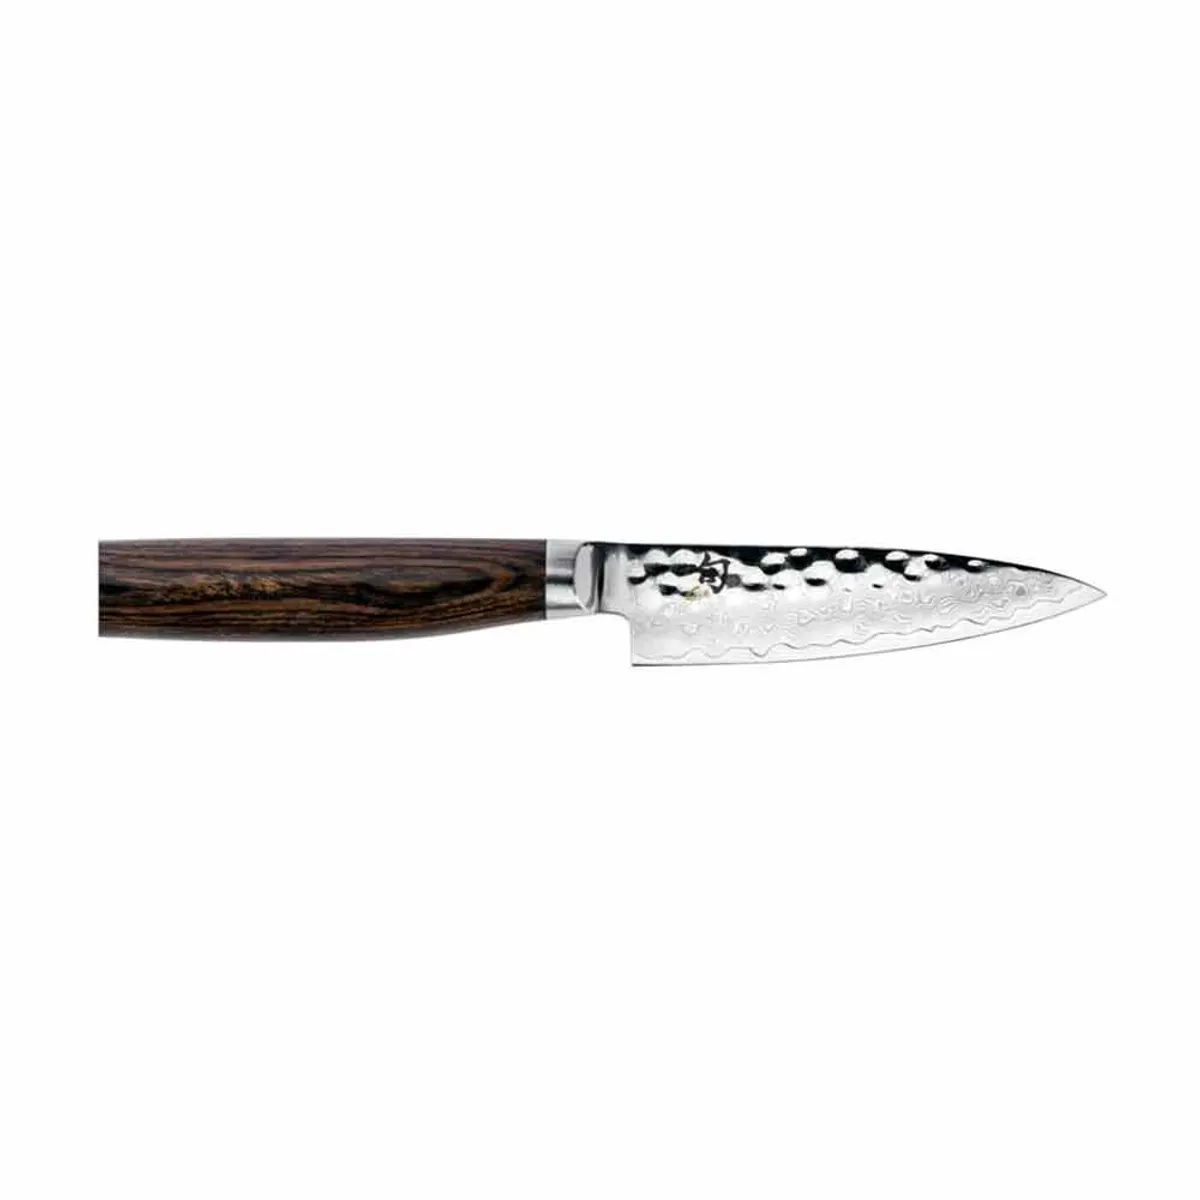 Shun Premier 4 inch Blade Paring Knife